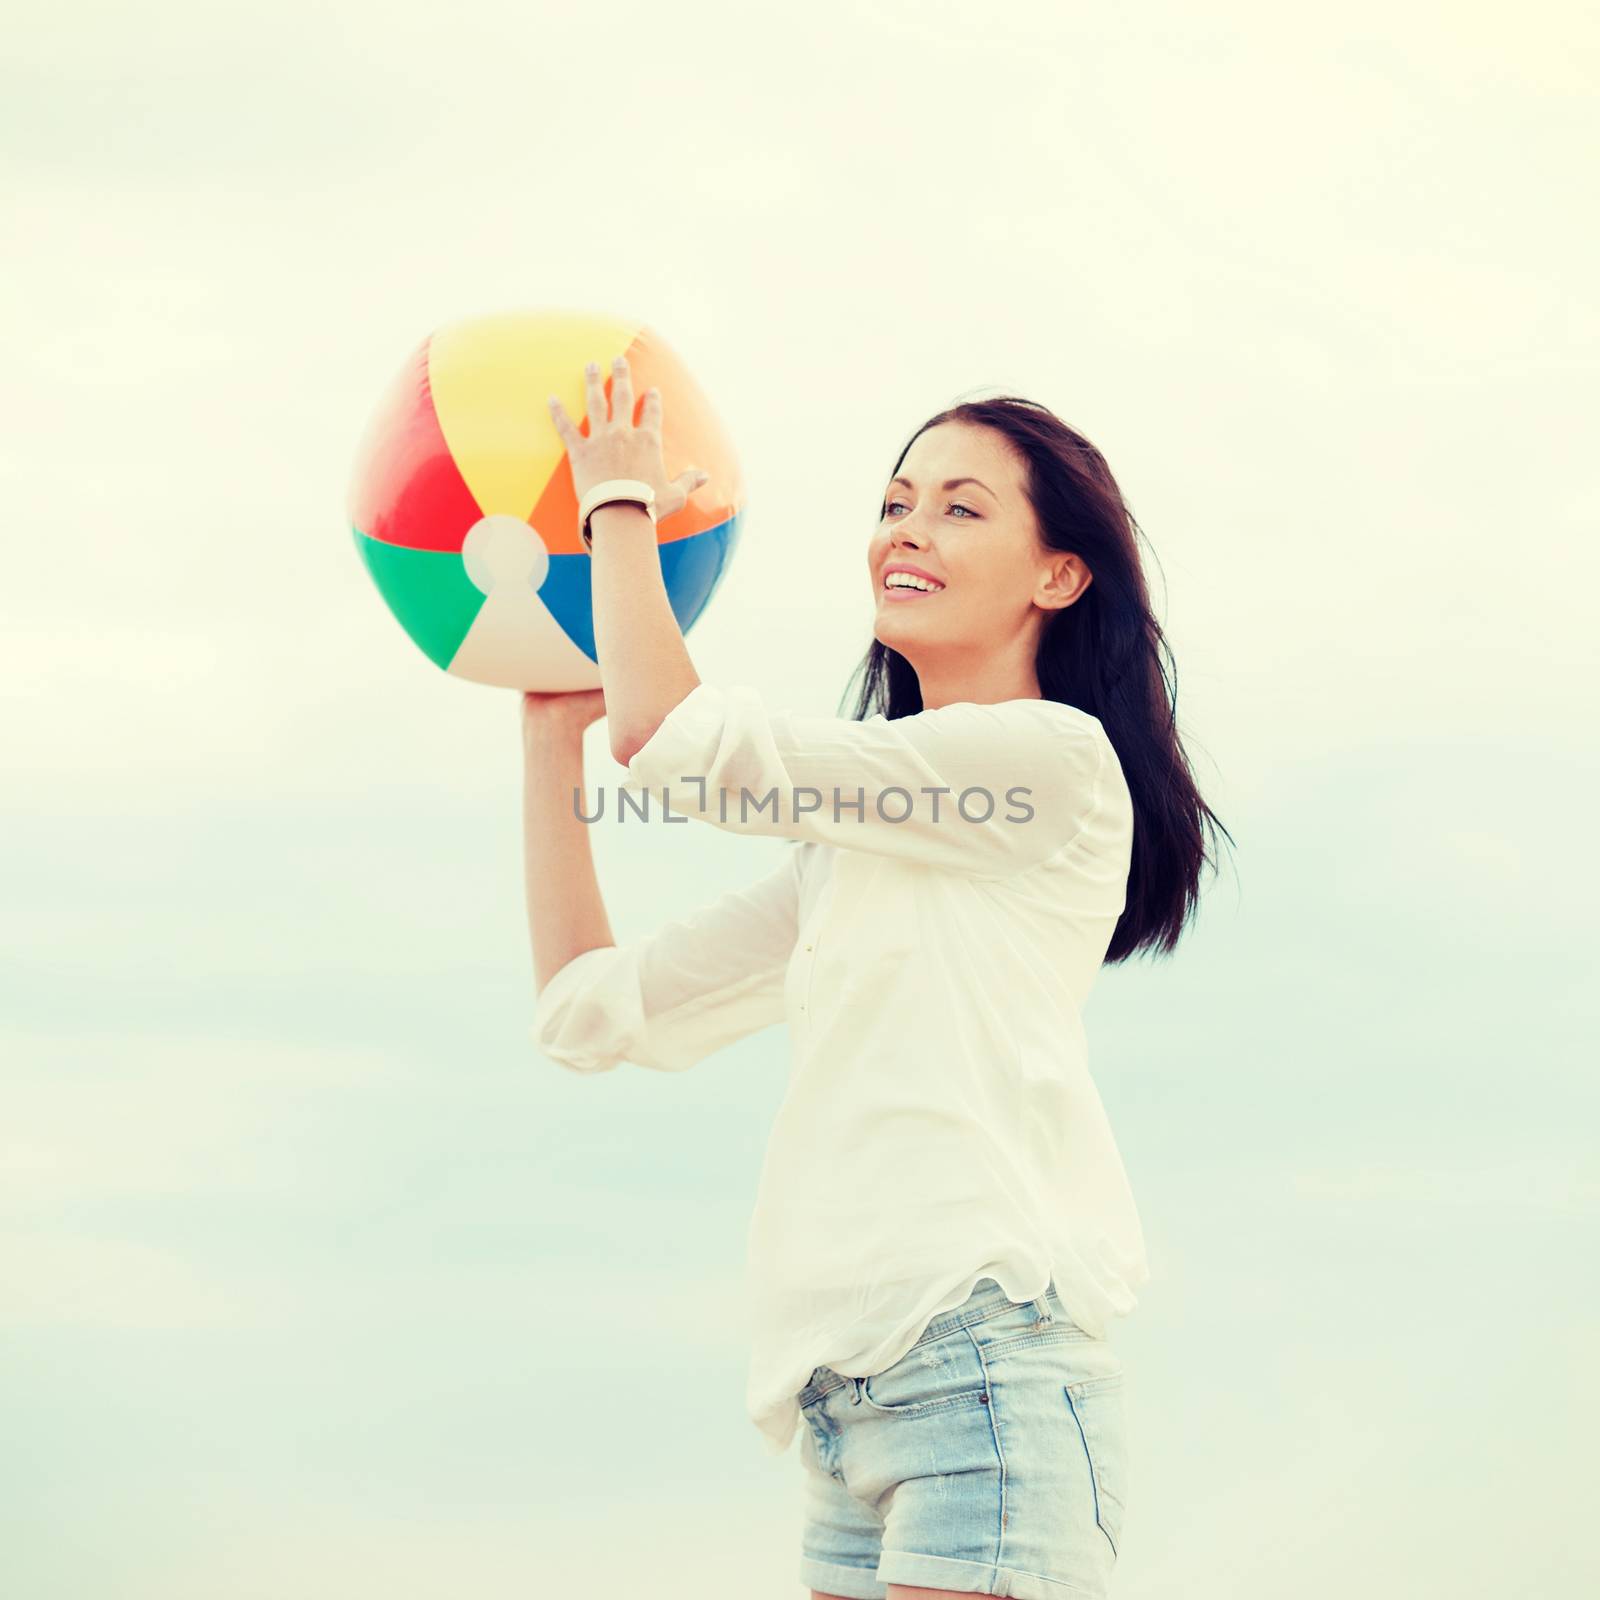 girl with ball on the beach by dolgachov